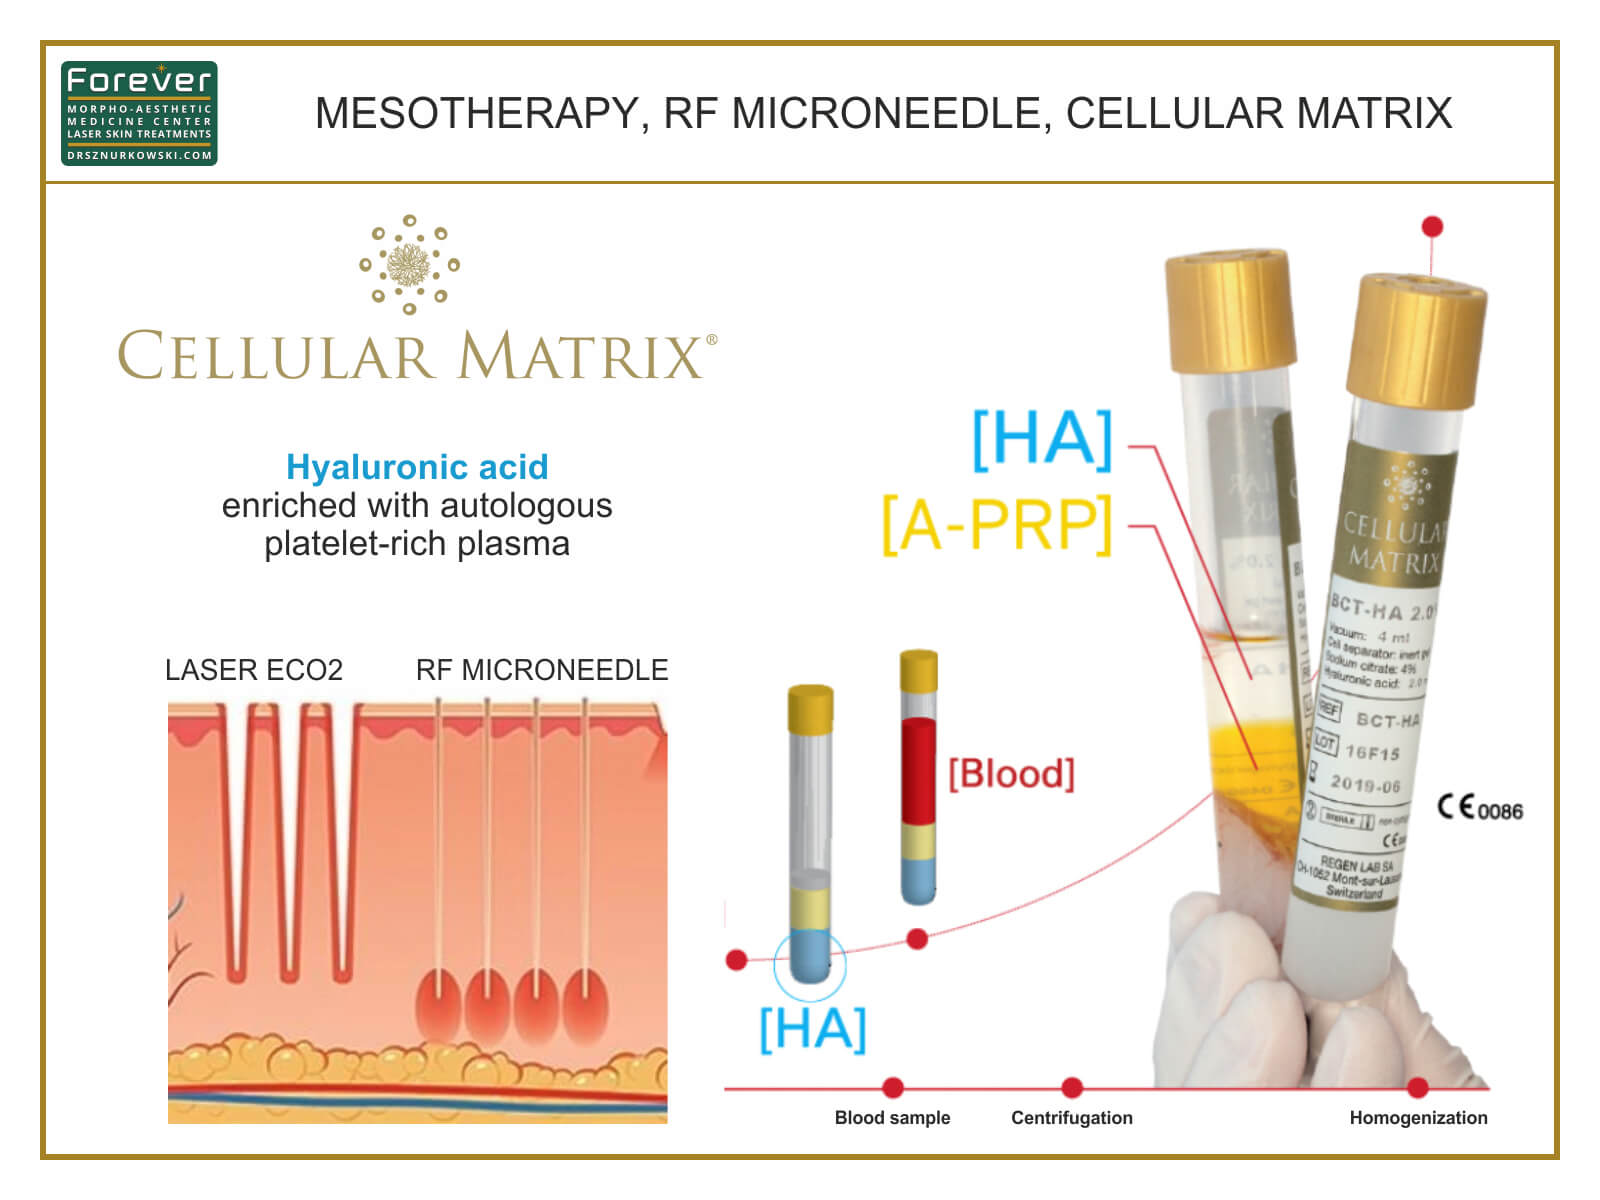 Mesotherapy, RF Microneedle, Cellular Matrix (80x60) EN.jpg